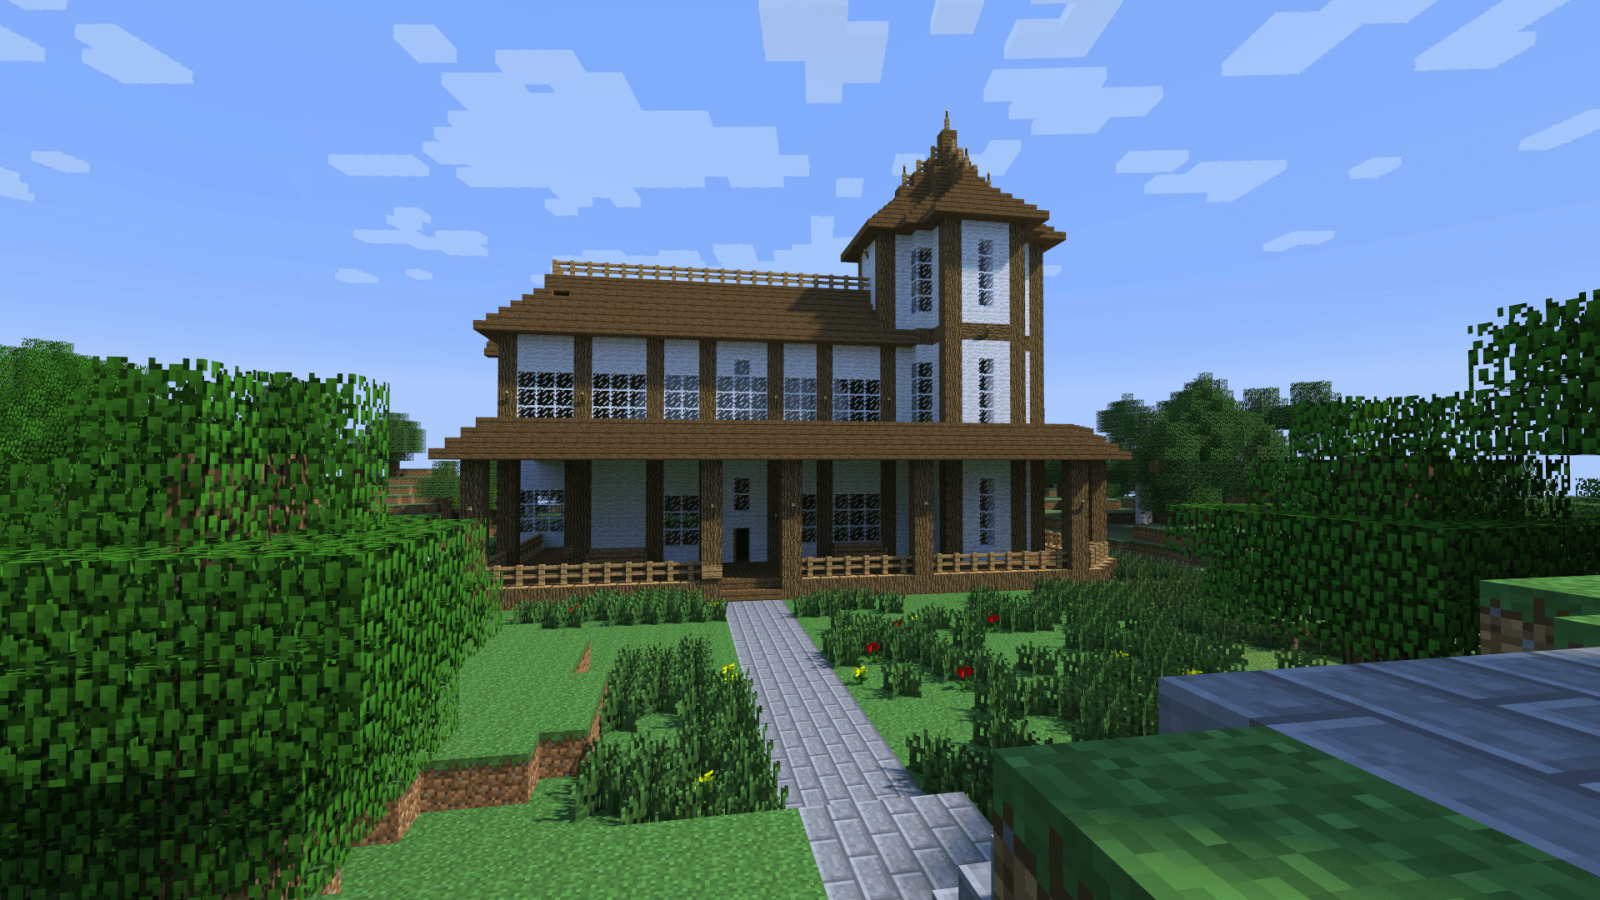 Minecraft House - Original image